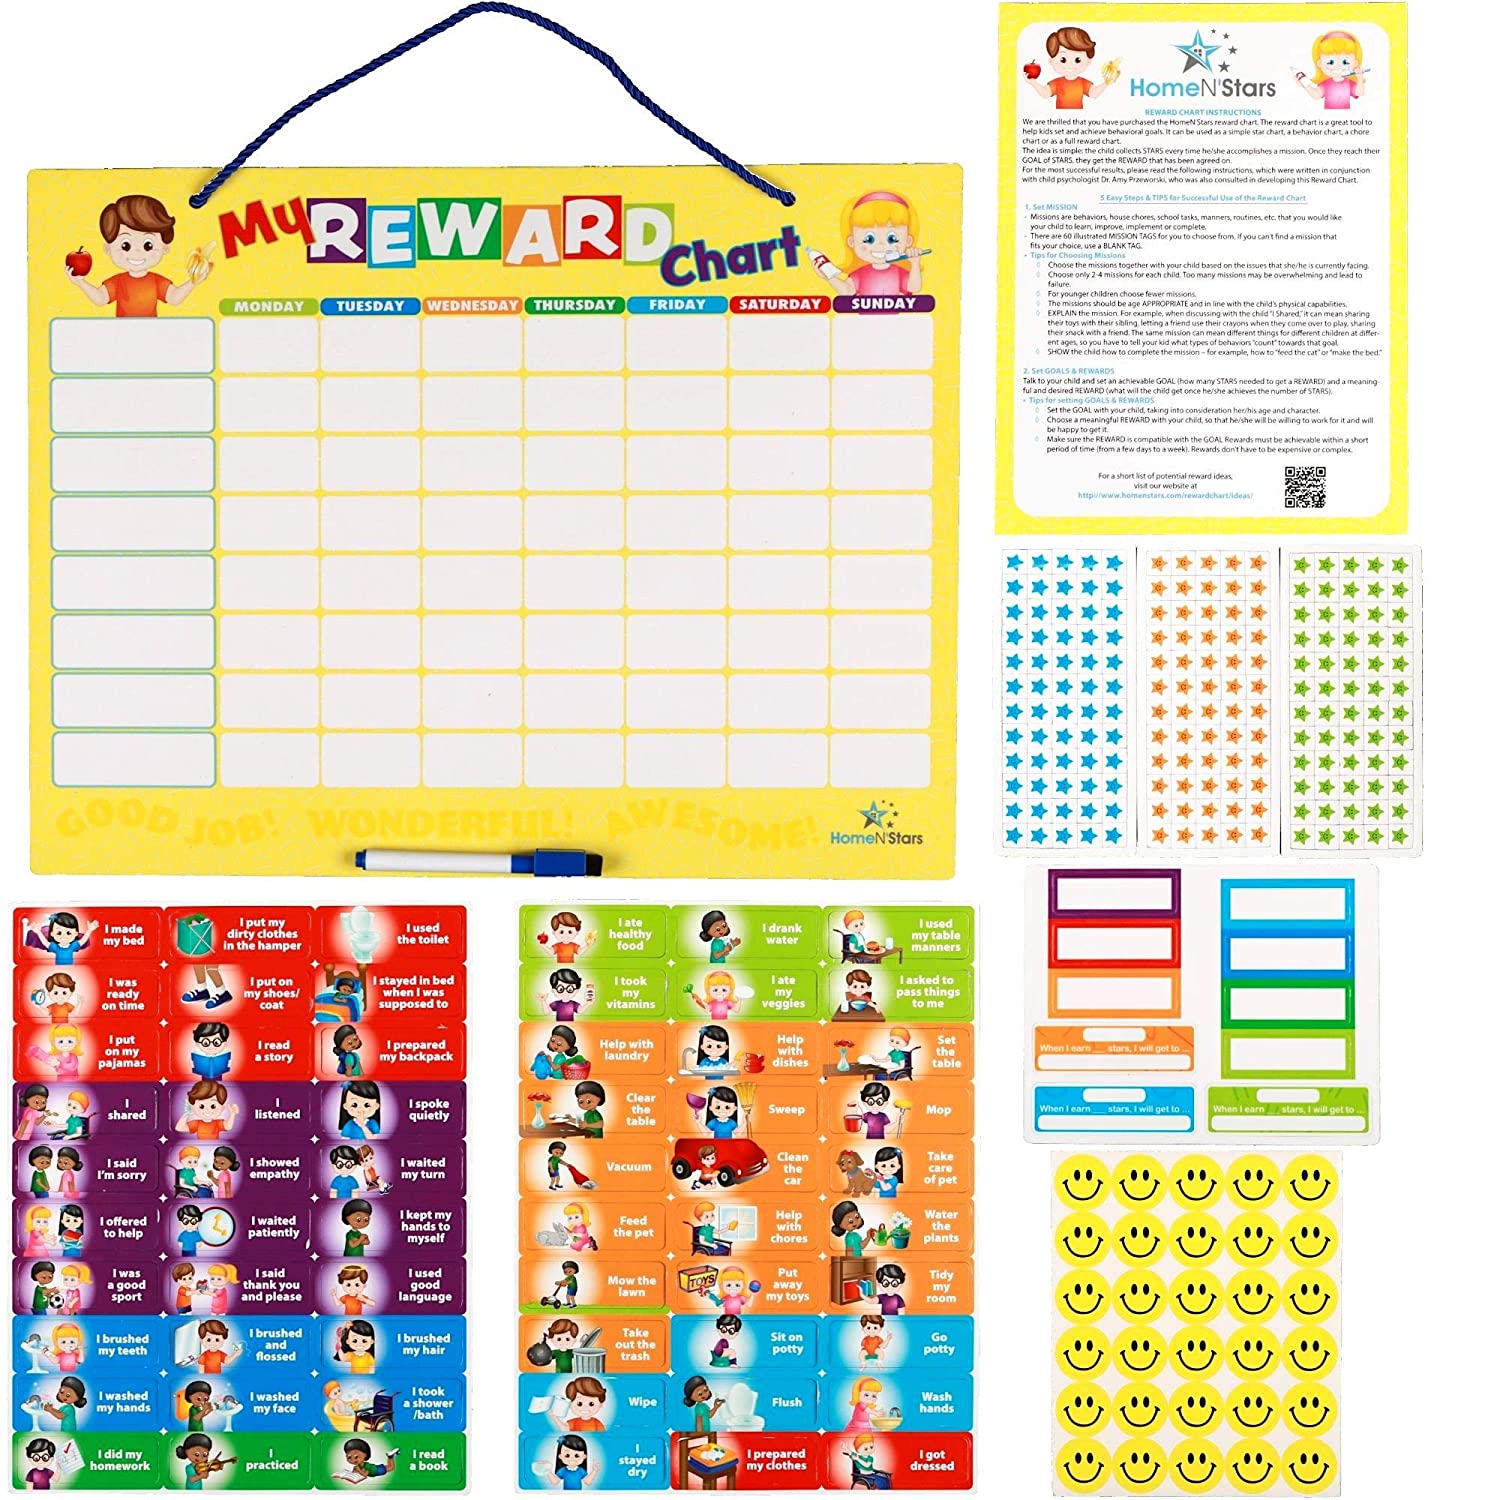 Star Boy Kid Chores Puzzles Printable Card Kids Reward Steps Sticker Chart Behavior Training Tasks Digital Download K02 Responsibility